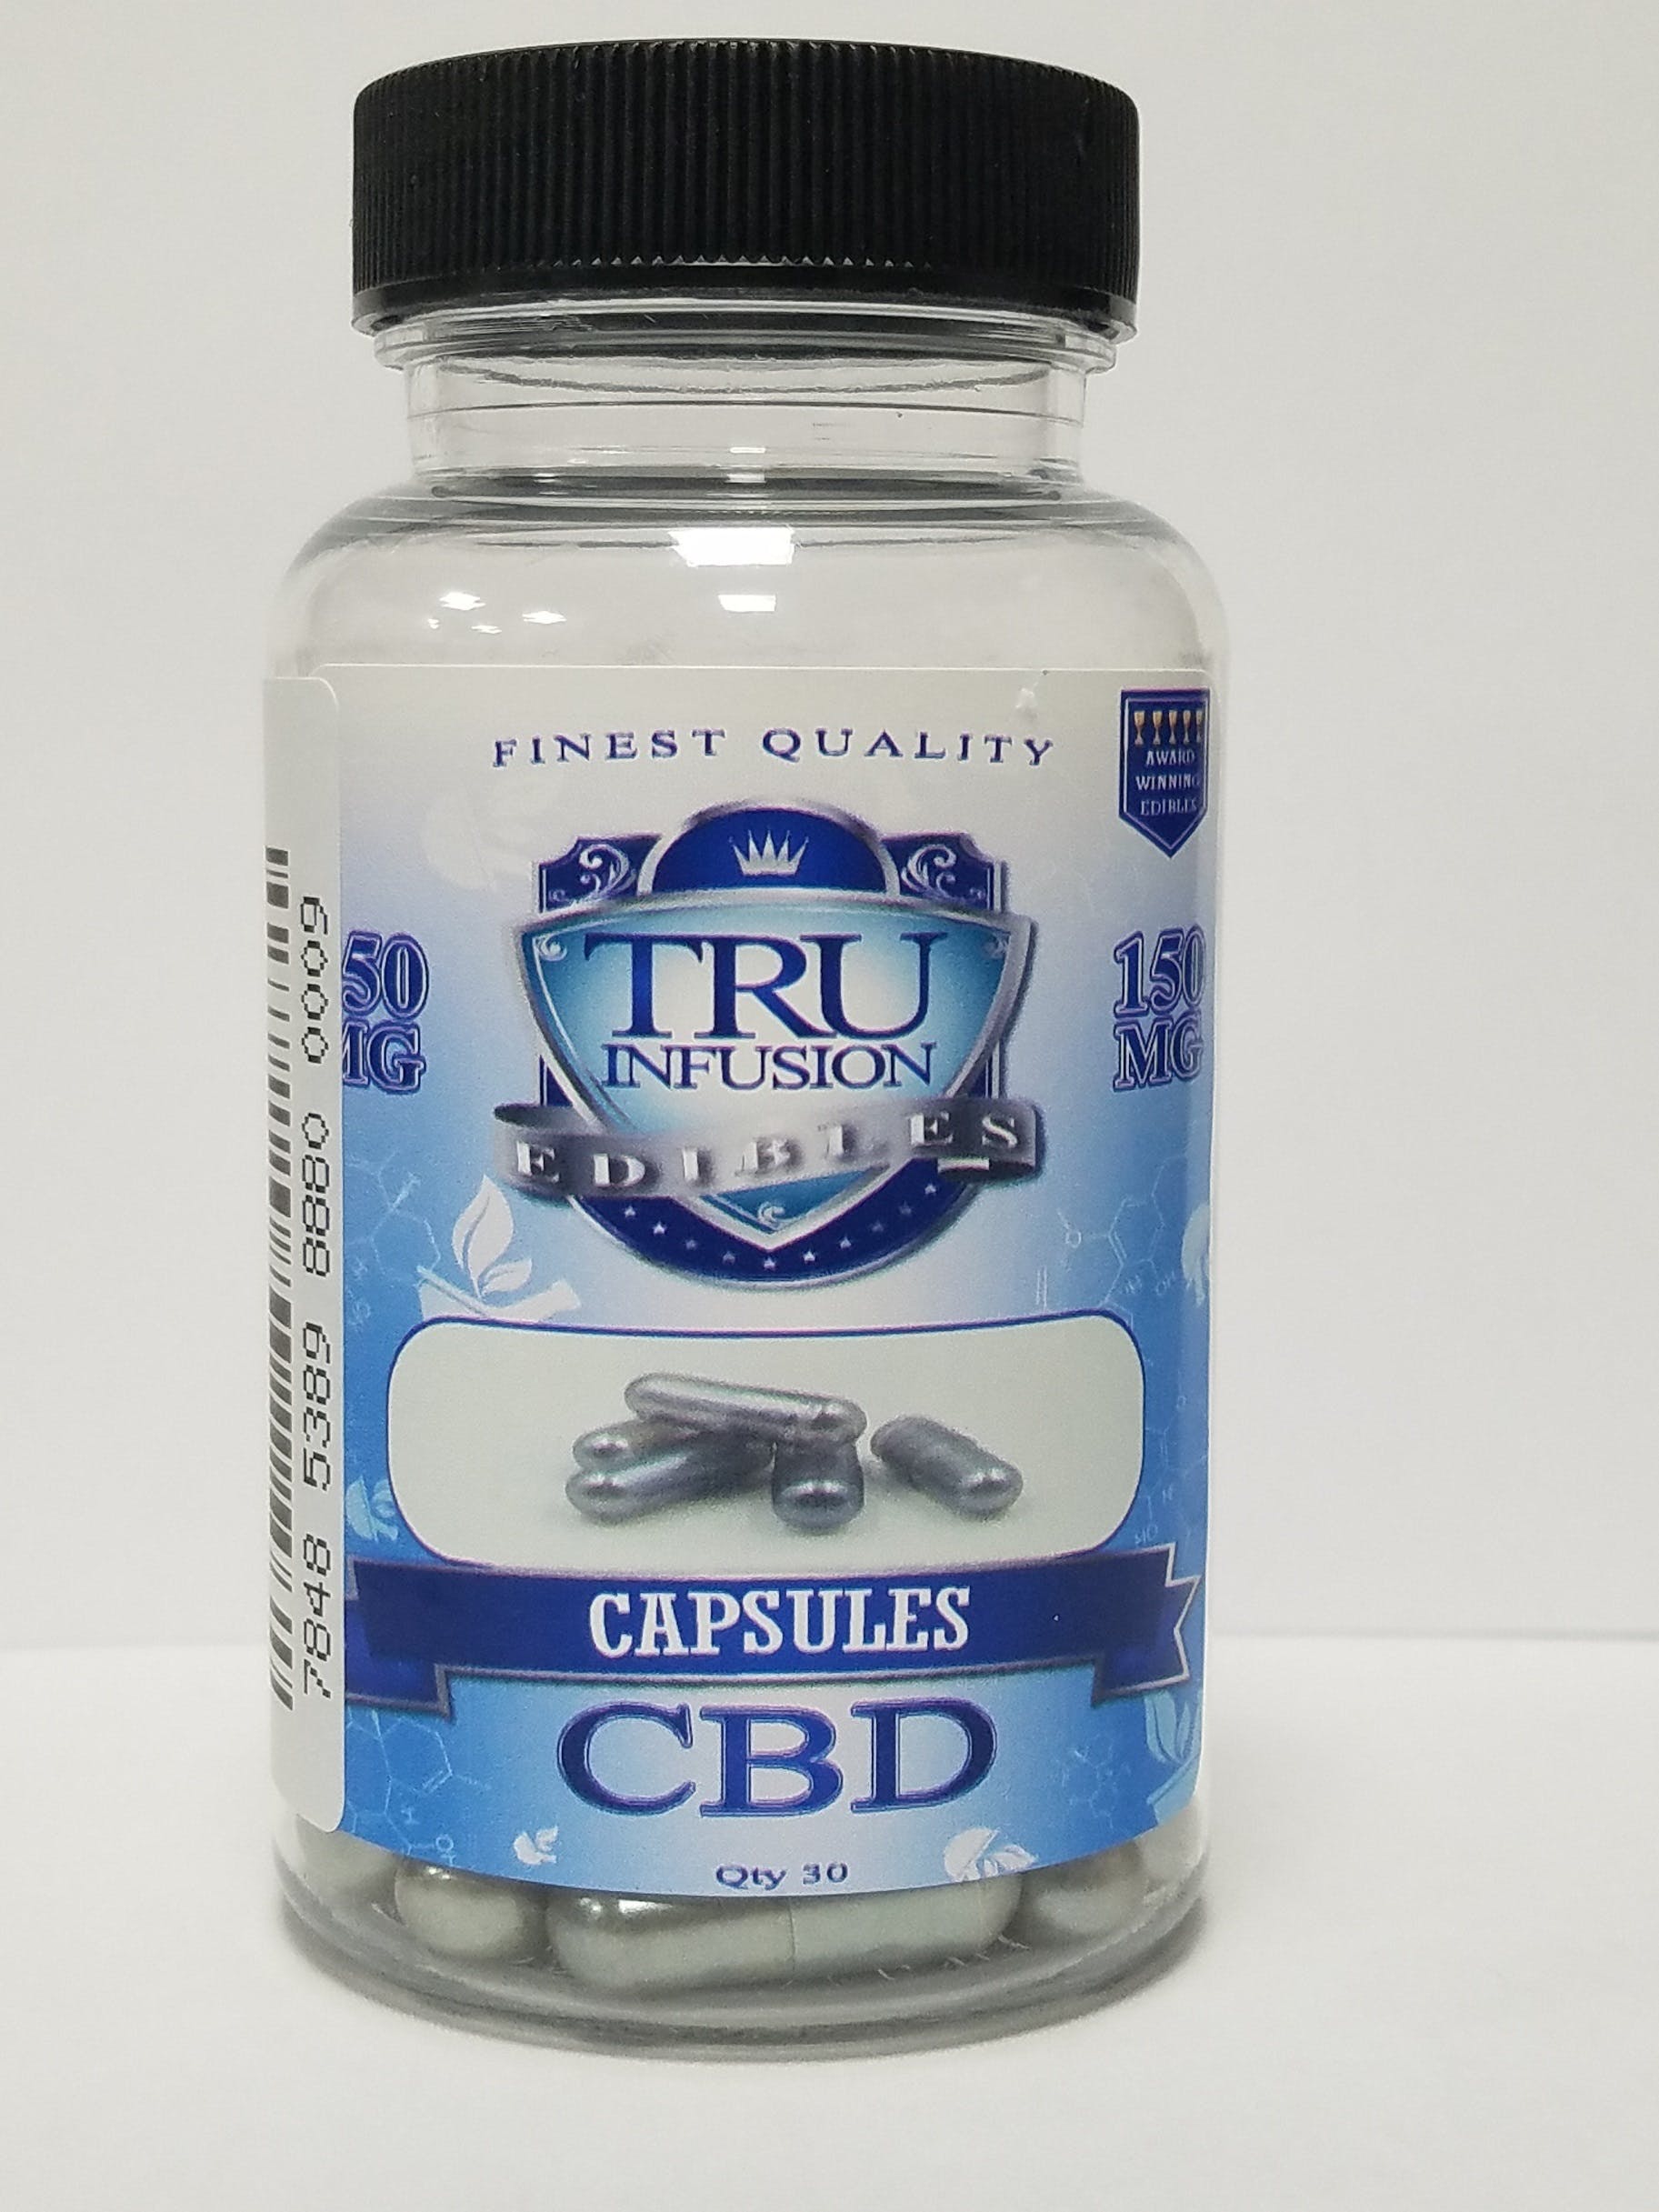 edible-tru-infusion-cbd-caps-30-day-supply-150mg